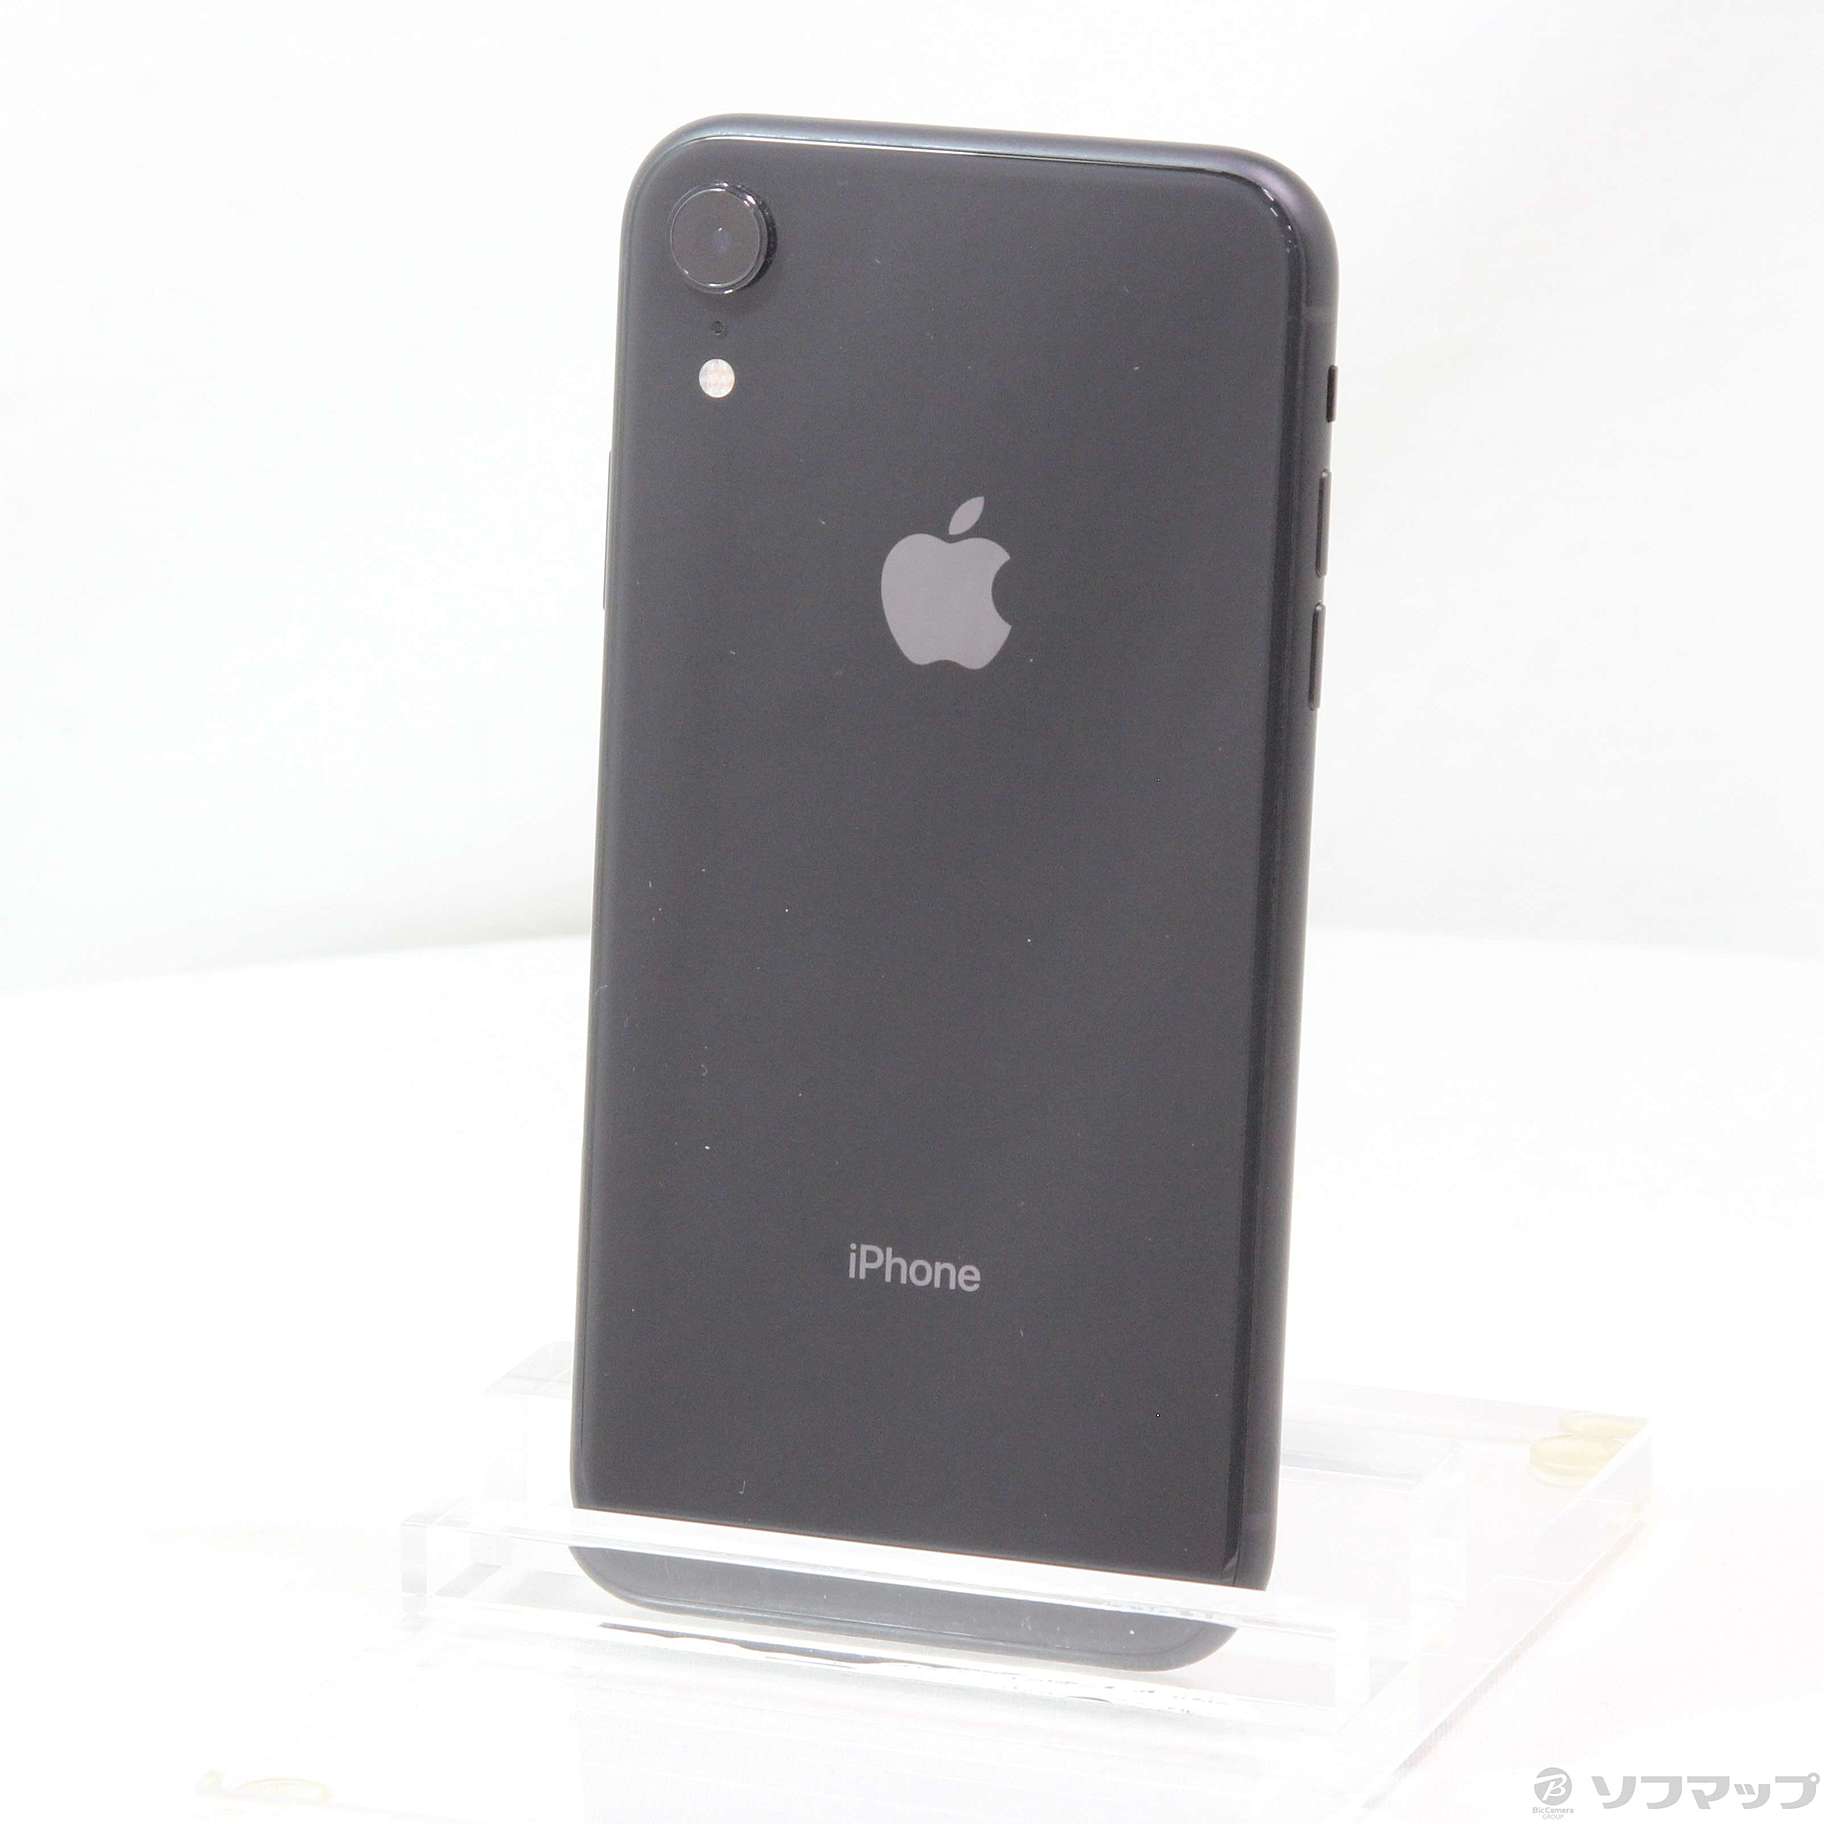 iPhoneXR BLACK 64GBカラーブラック